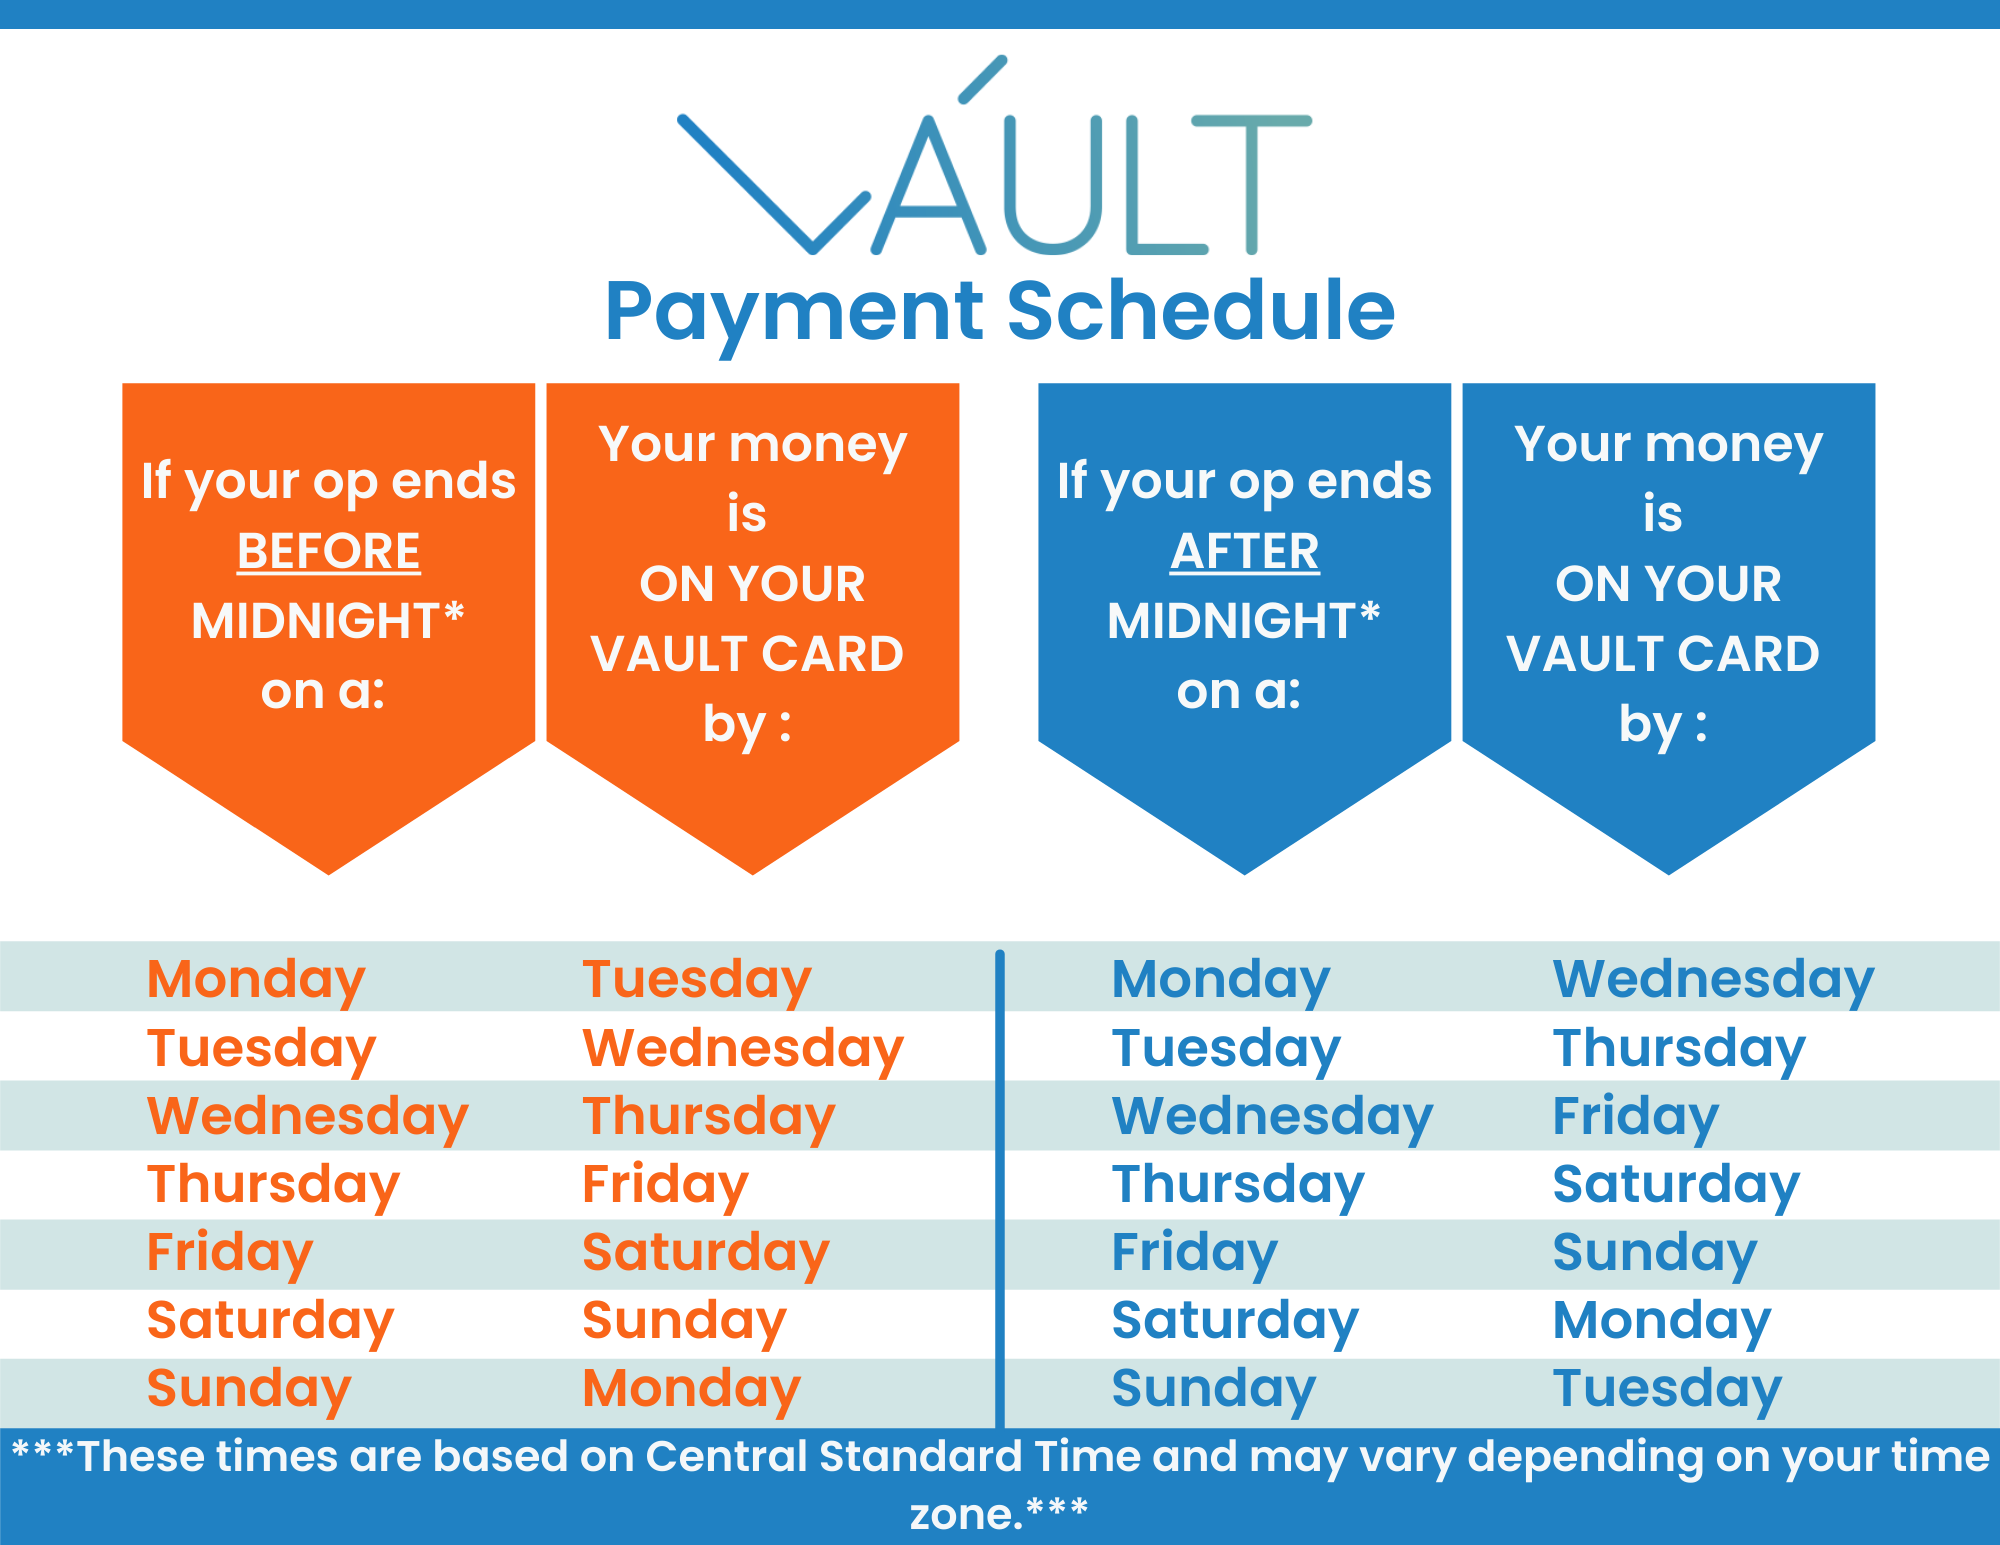 CORRECTED_Vault_Payment_Schedule-2.png